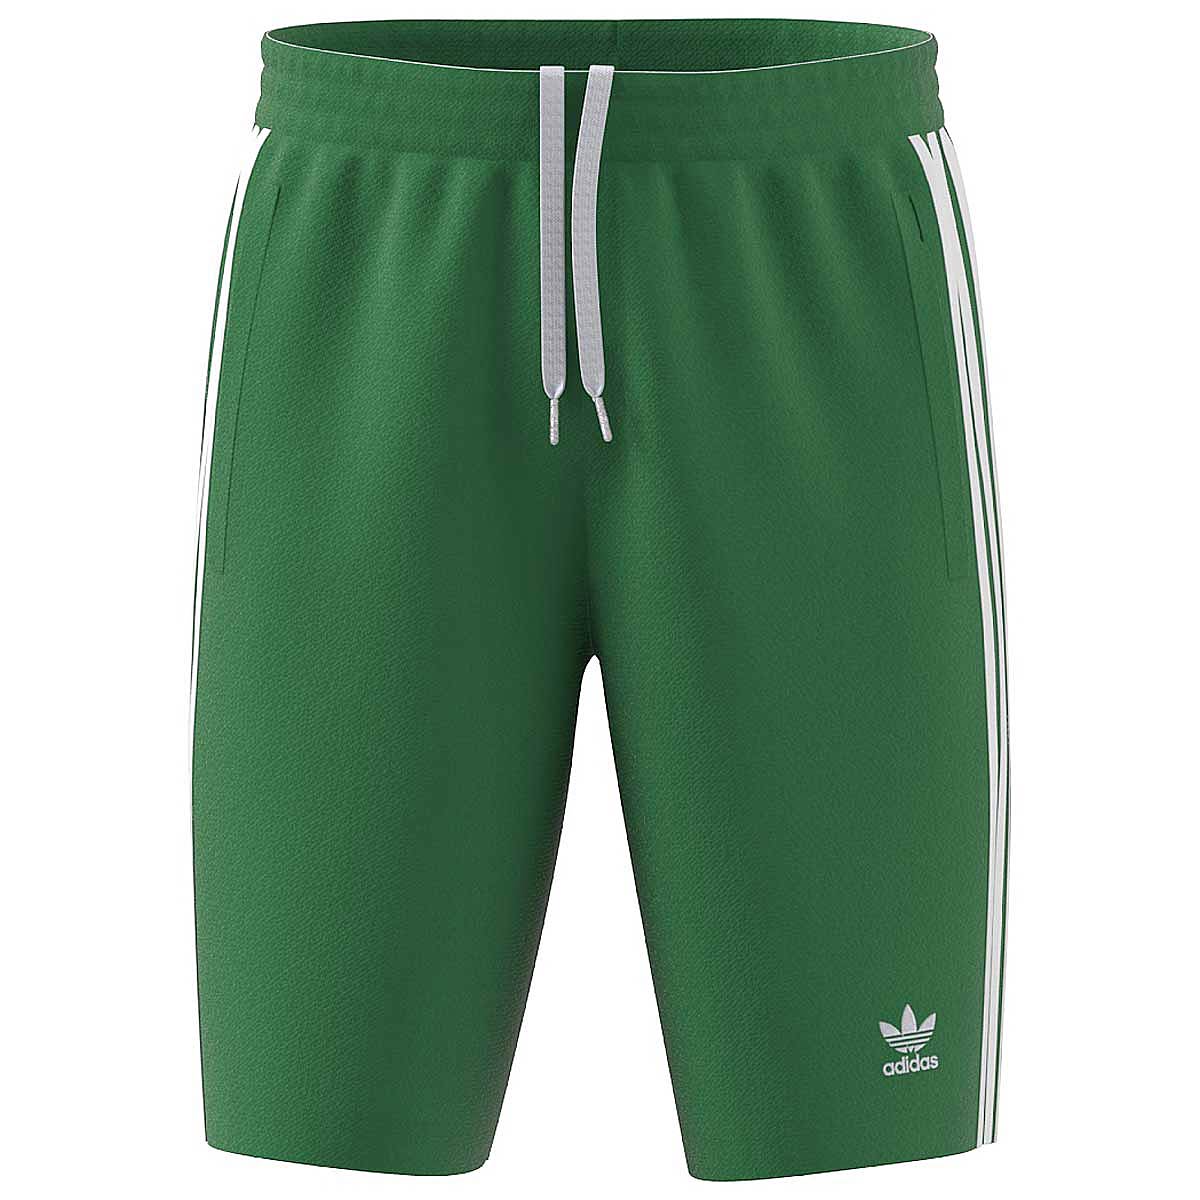 Image of Adidas 3-stripe Shorts, Green